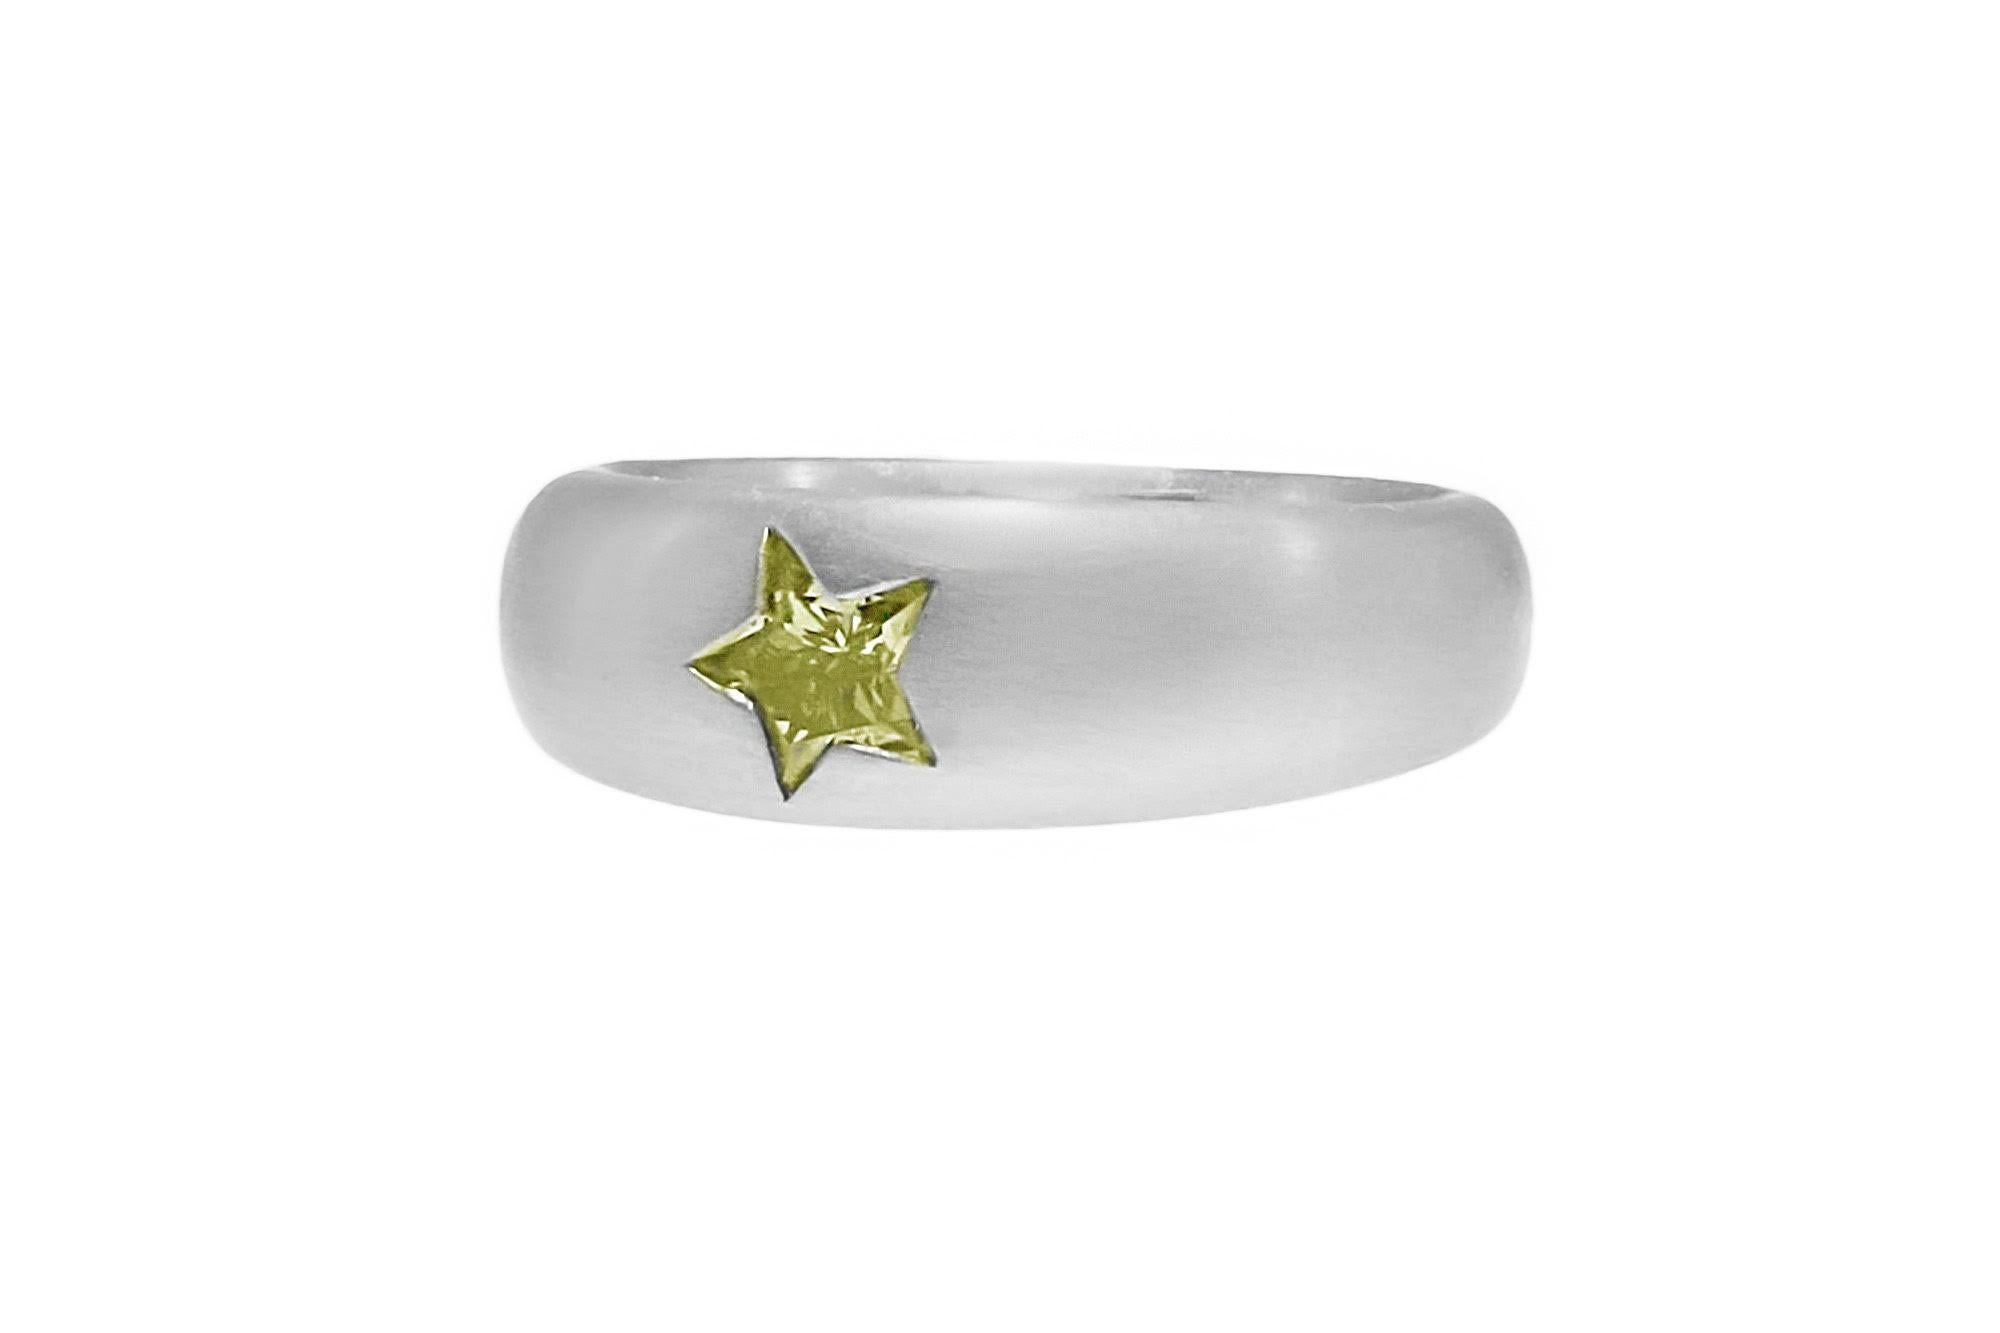 Handmade Platinum Fancy Color Diamond Ring set with a Star Cut Diamond weighting 0.50 carat.